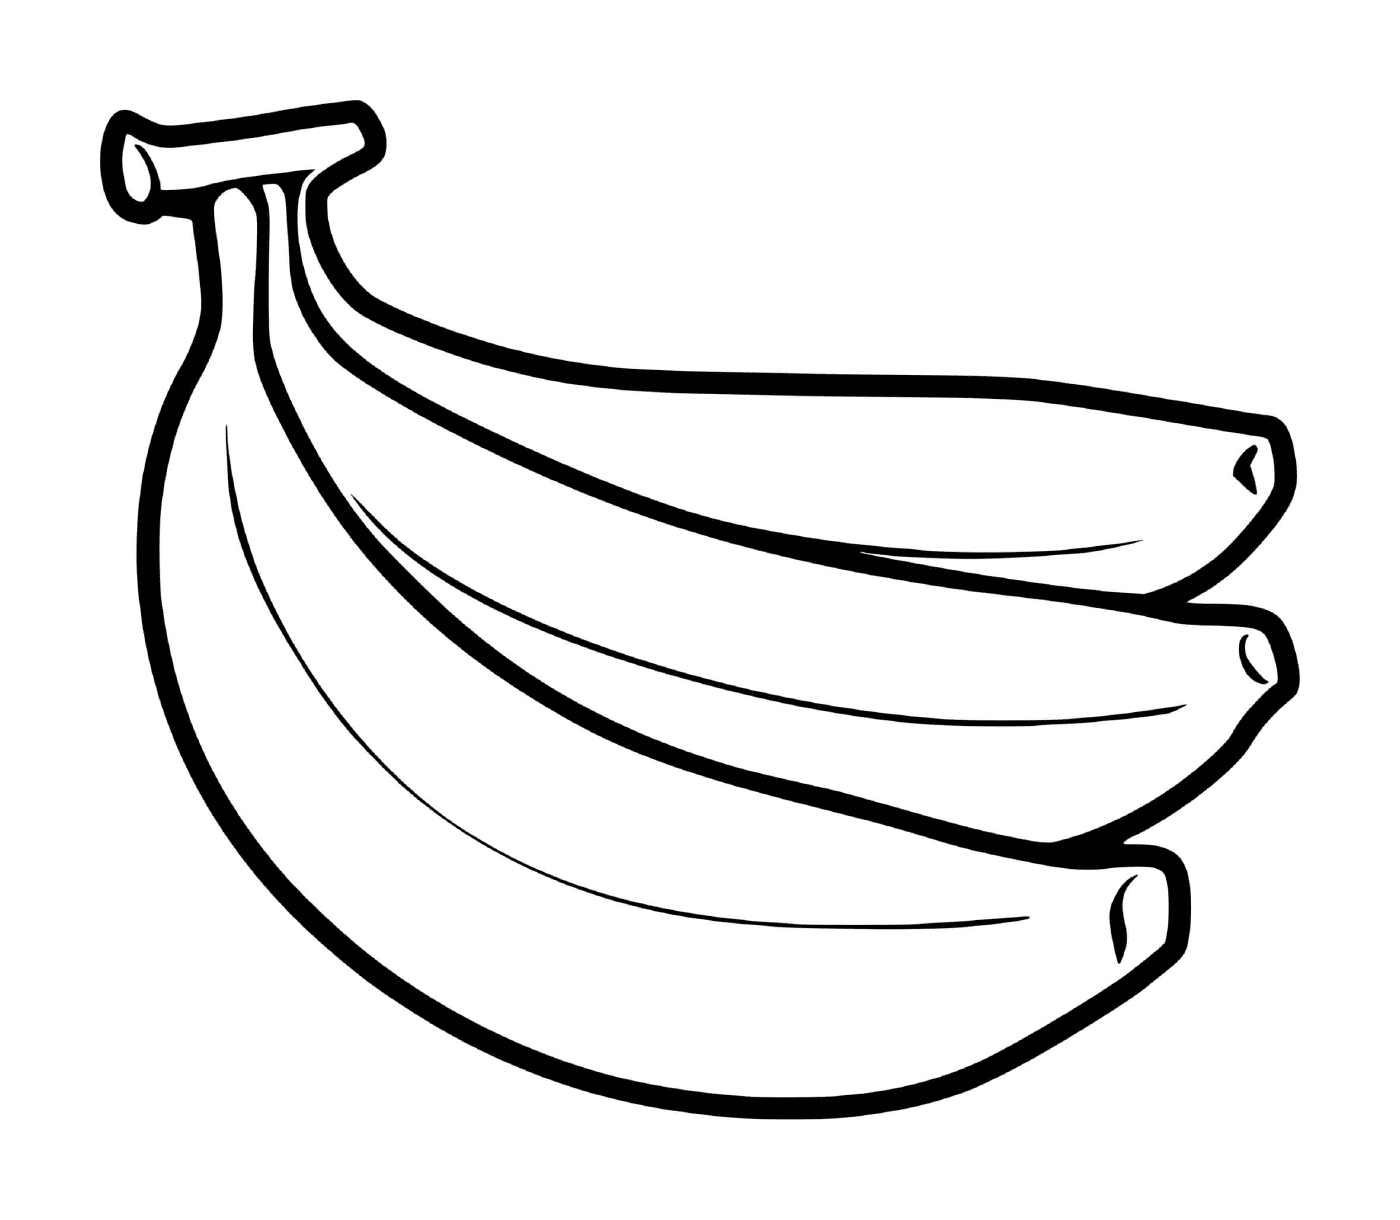  Кучка бананов, посаженных на землю 